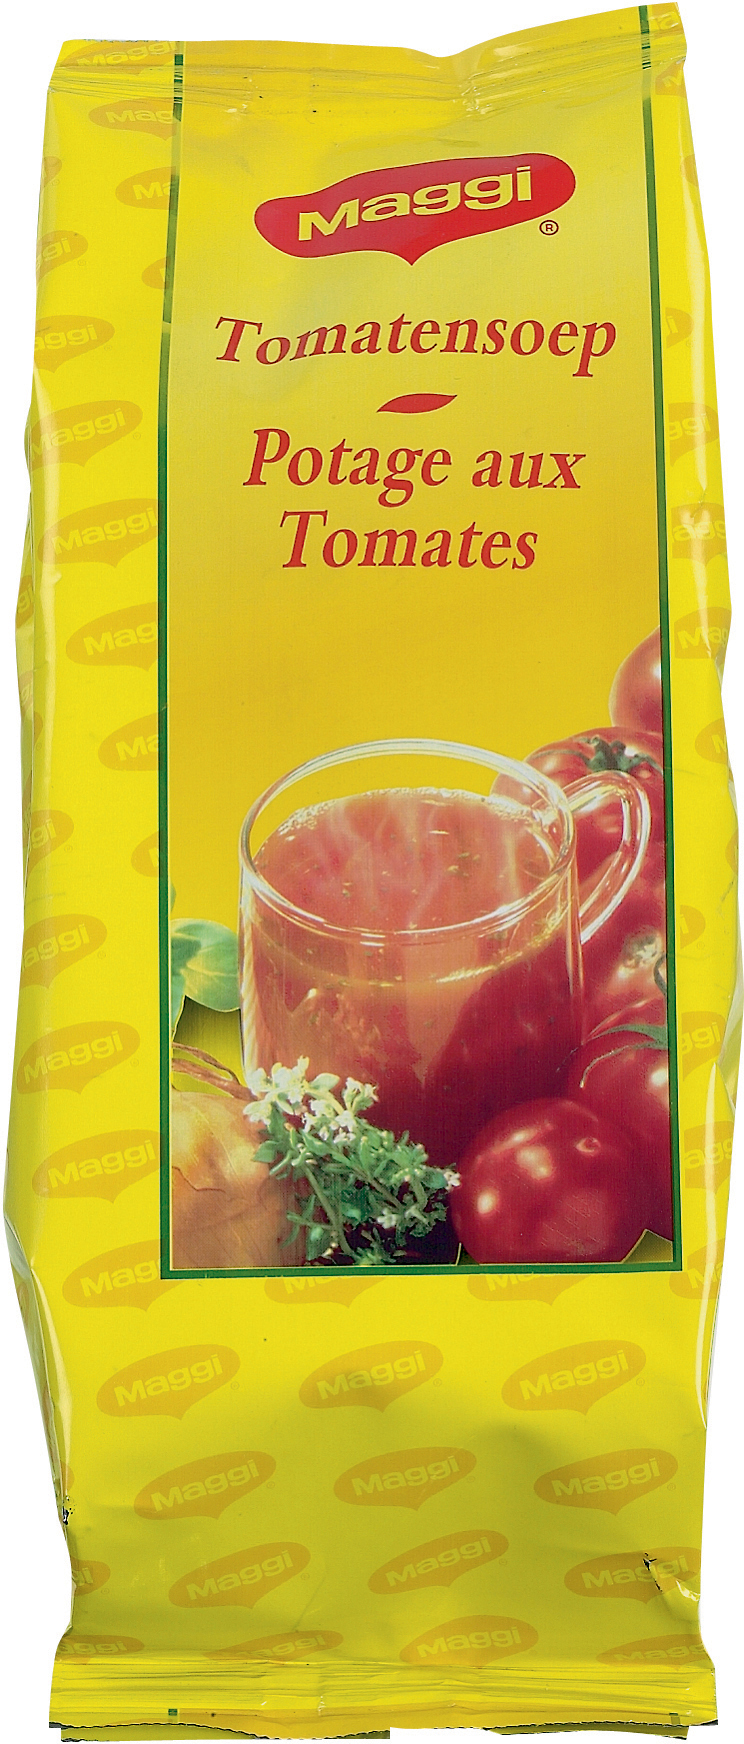 Maggi tomatensoep 1 kg